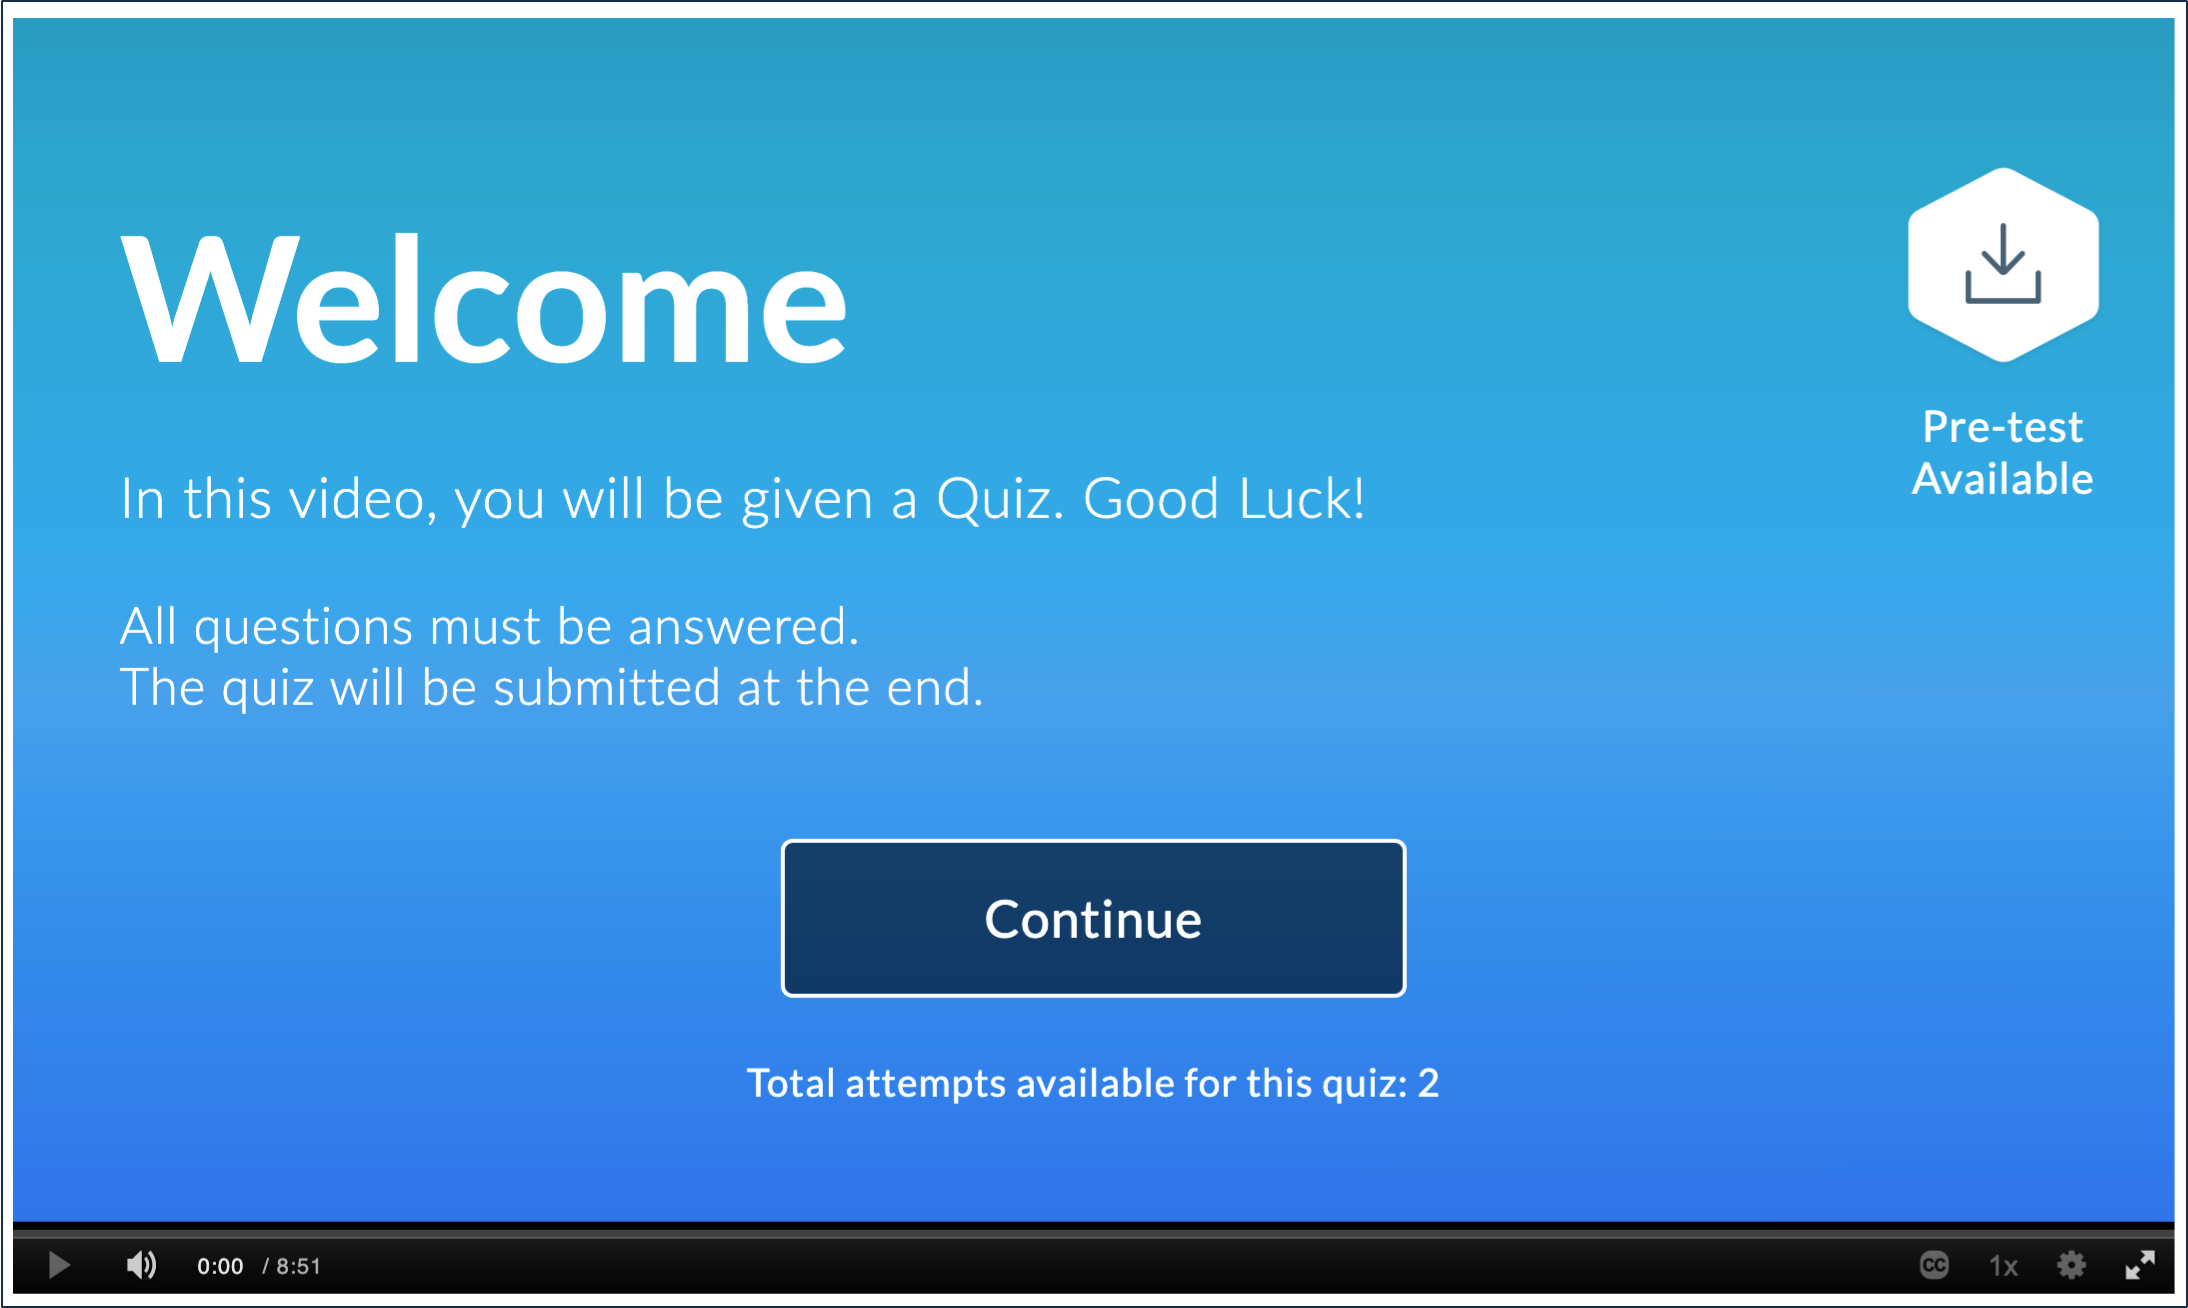 A screenshot of an in-video quiz welcome screen.